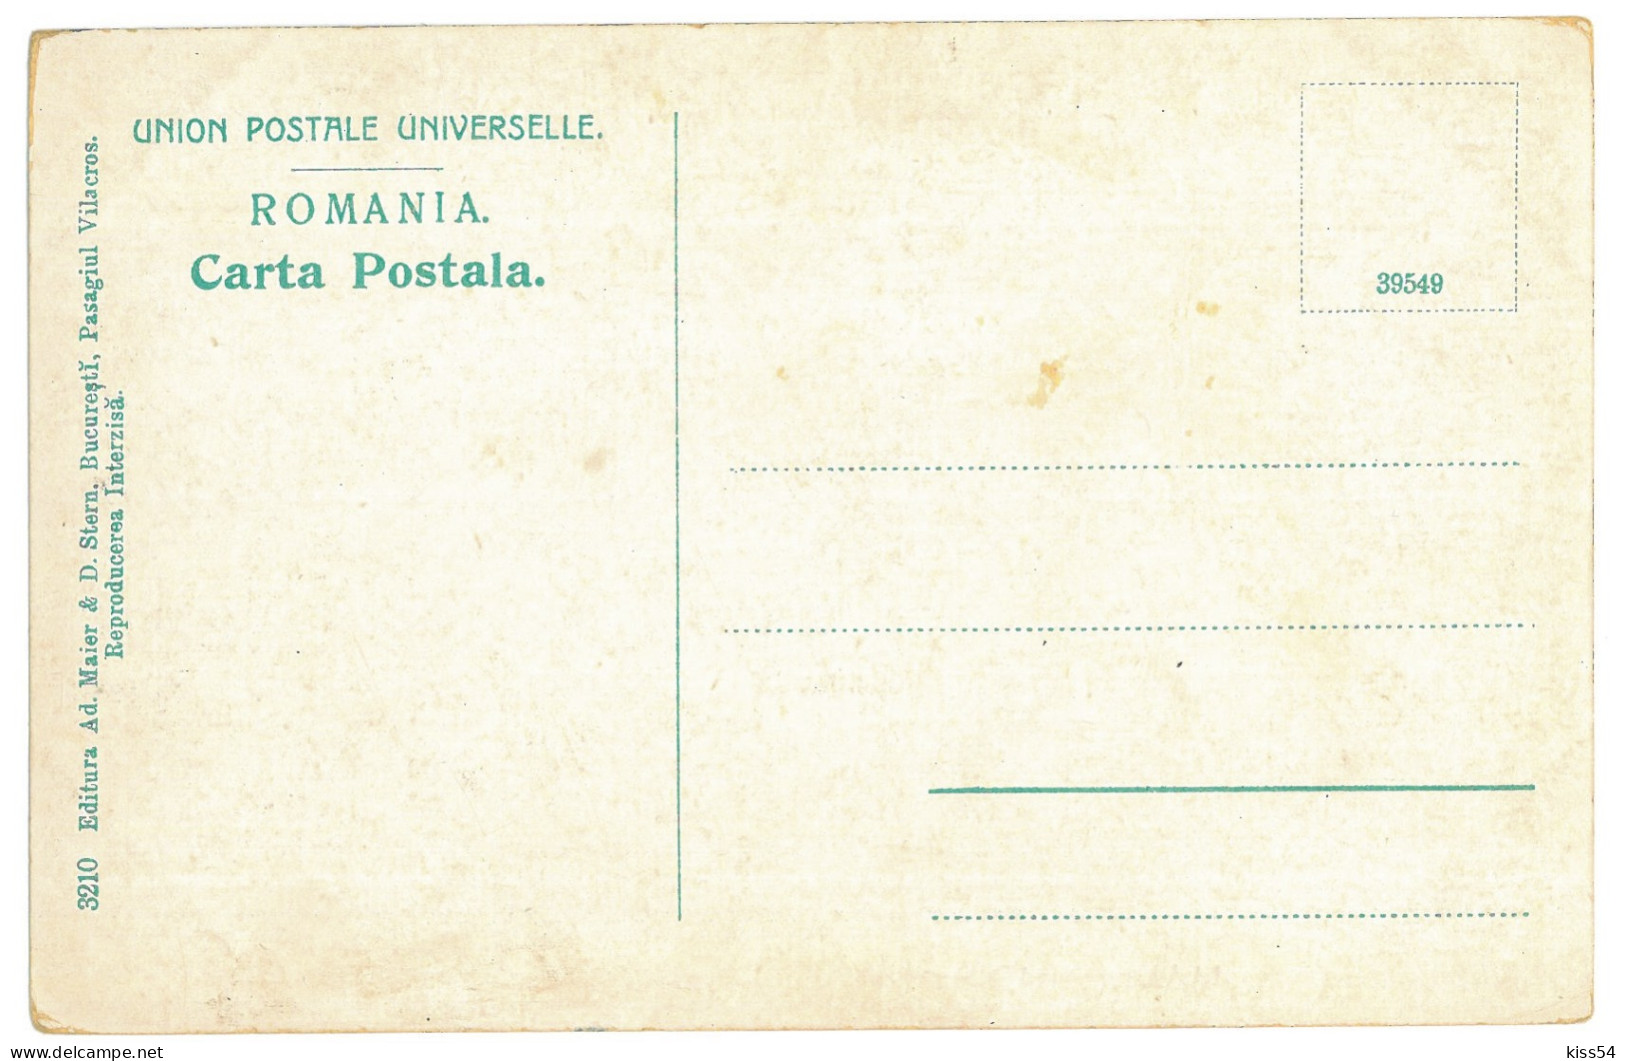 RO 09 - 25106 MORENI, Dambovita, Oil Wells, FIRE, Romania - Old Postcard - Unused - Roumanie